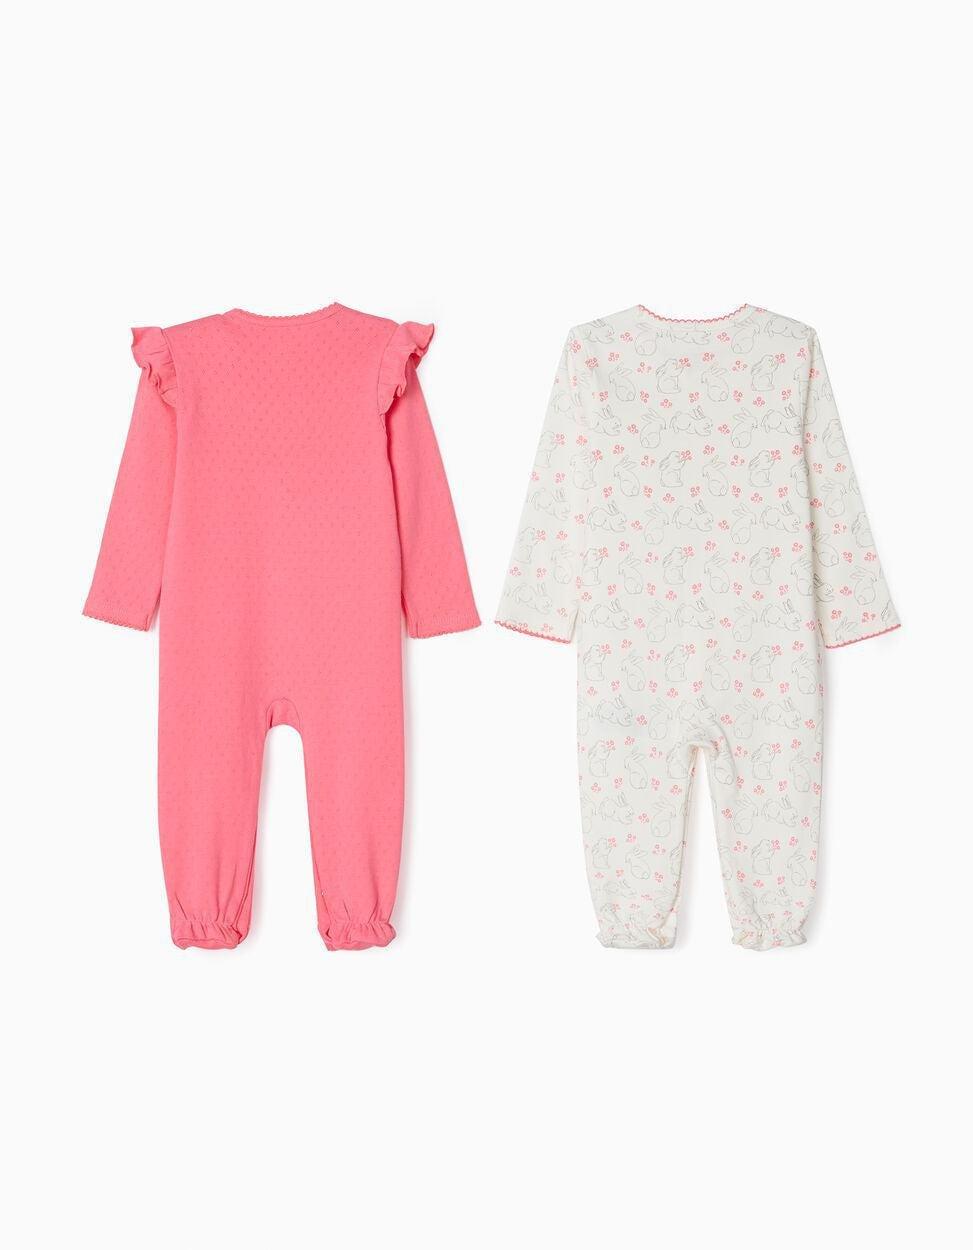 Zippy - Zippy 2 Sleepsuits For Baby Girls 'Bunnies', White/Pink